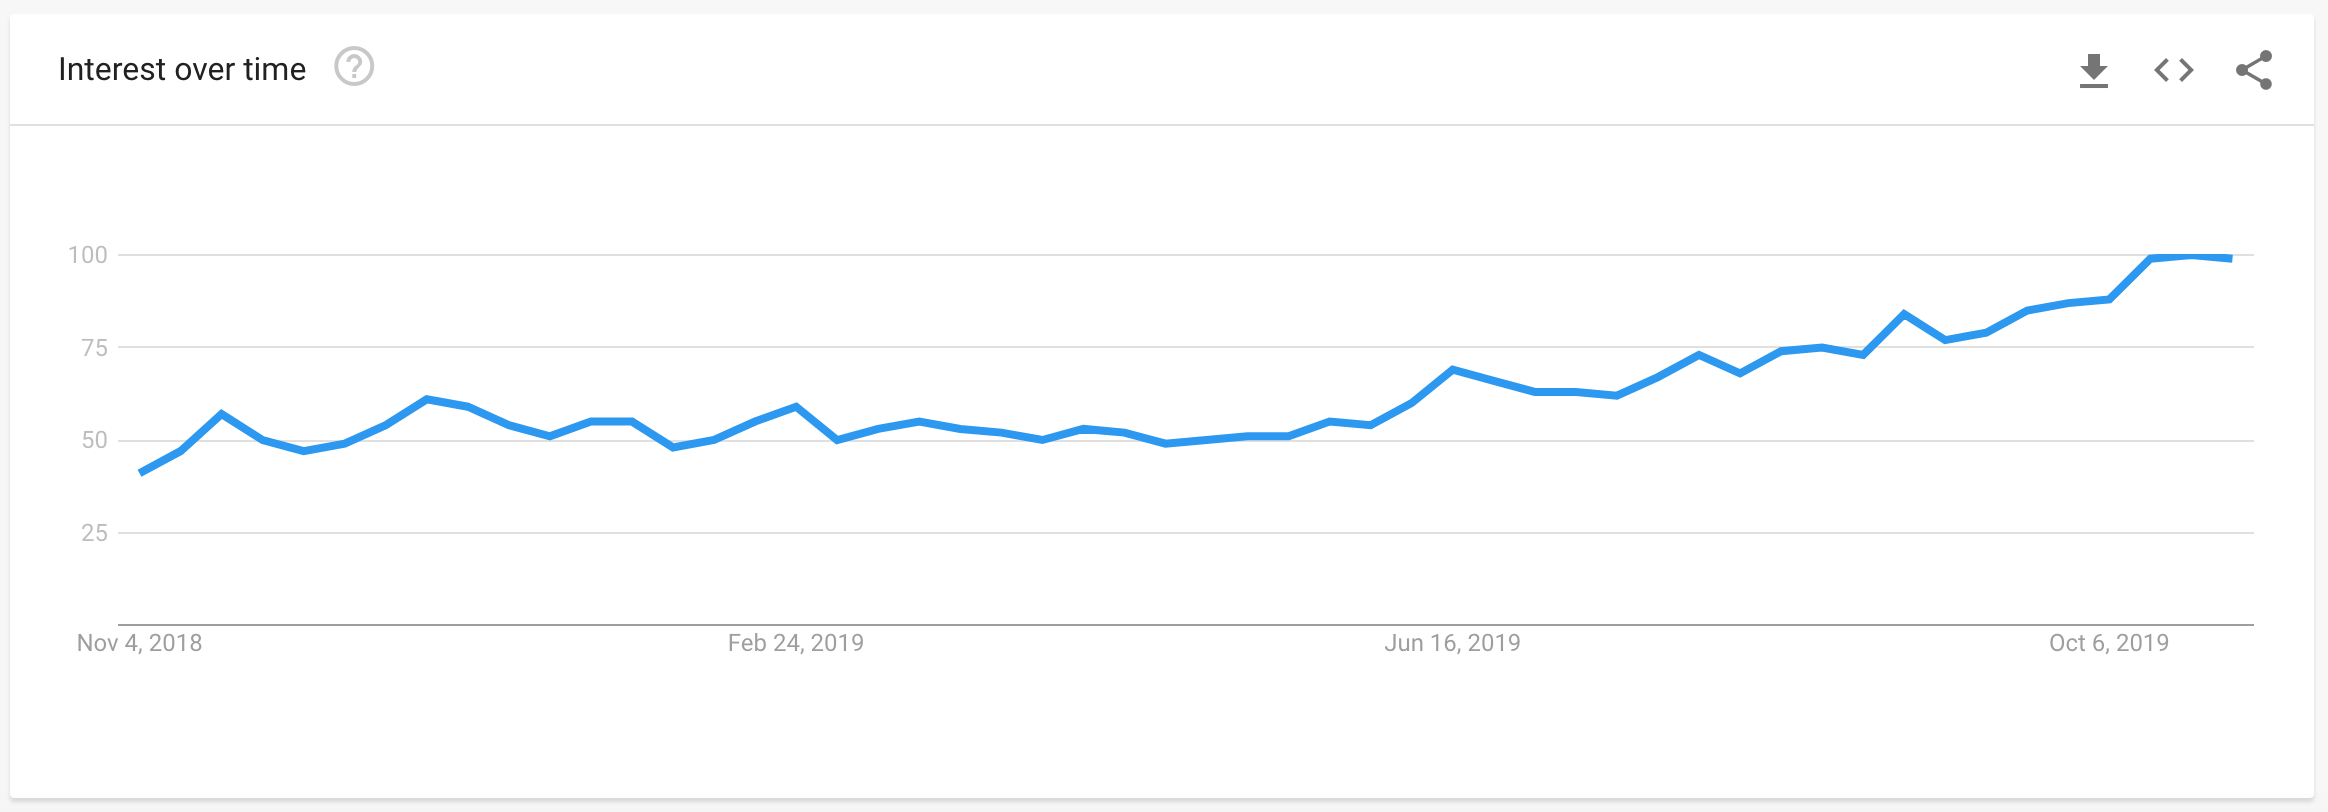 Tik Tok Google Trends Past Year